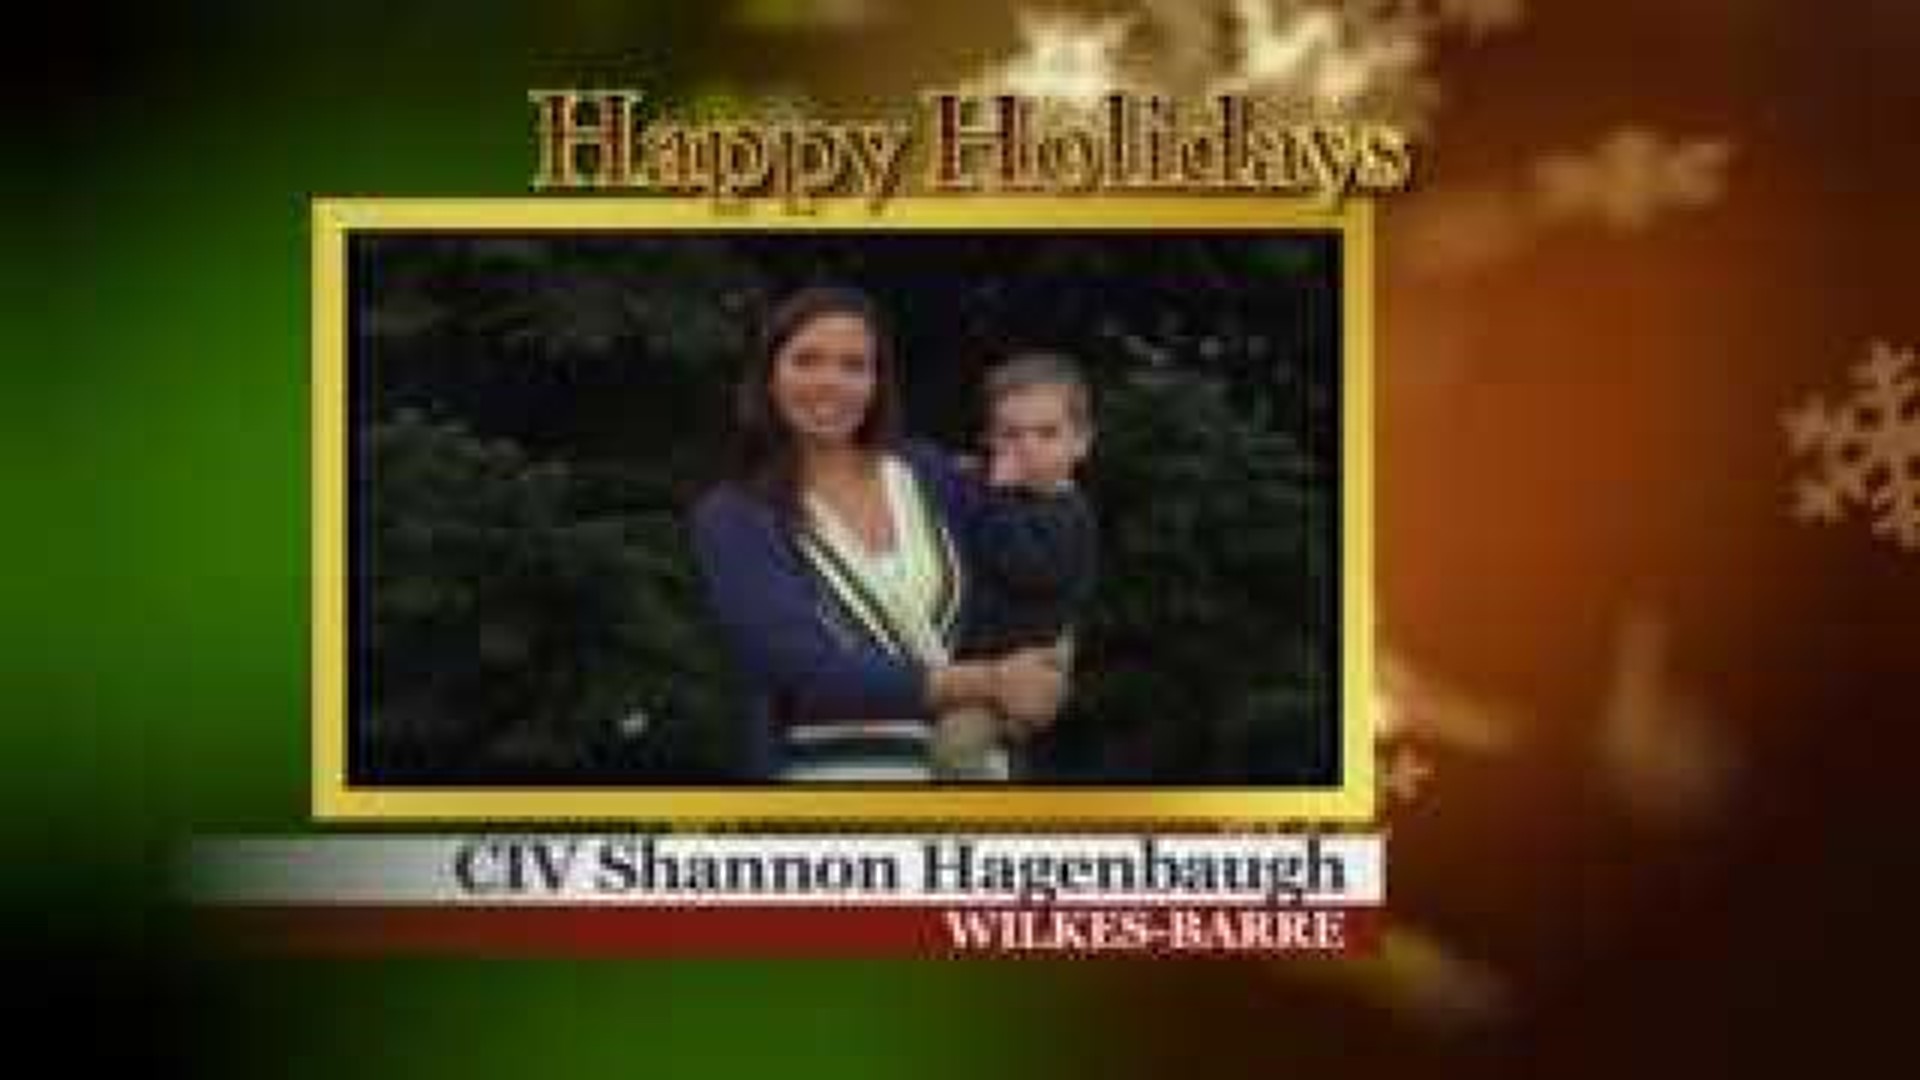 Military Greeting: CIV Shannon Hagenbaugh